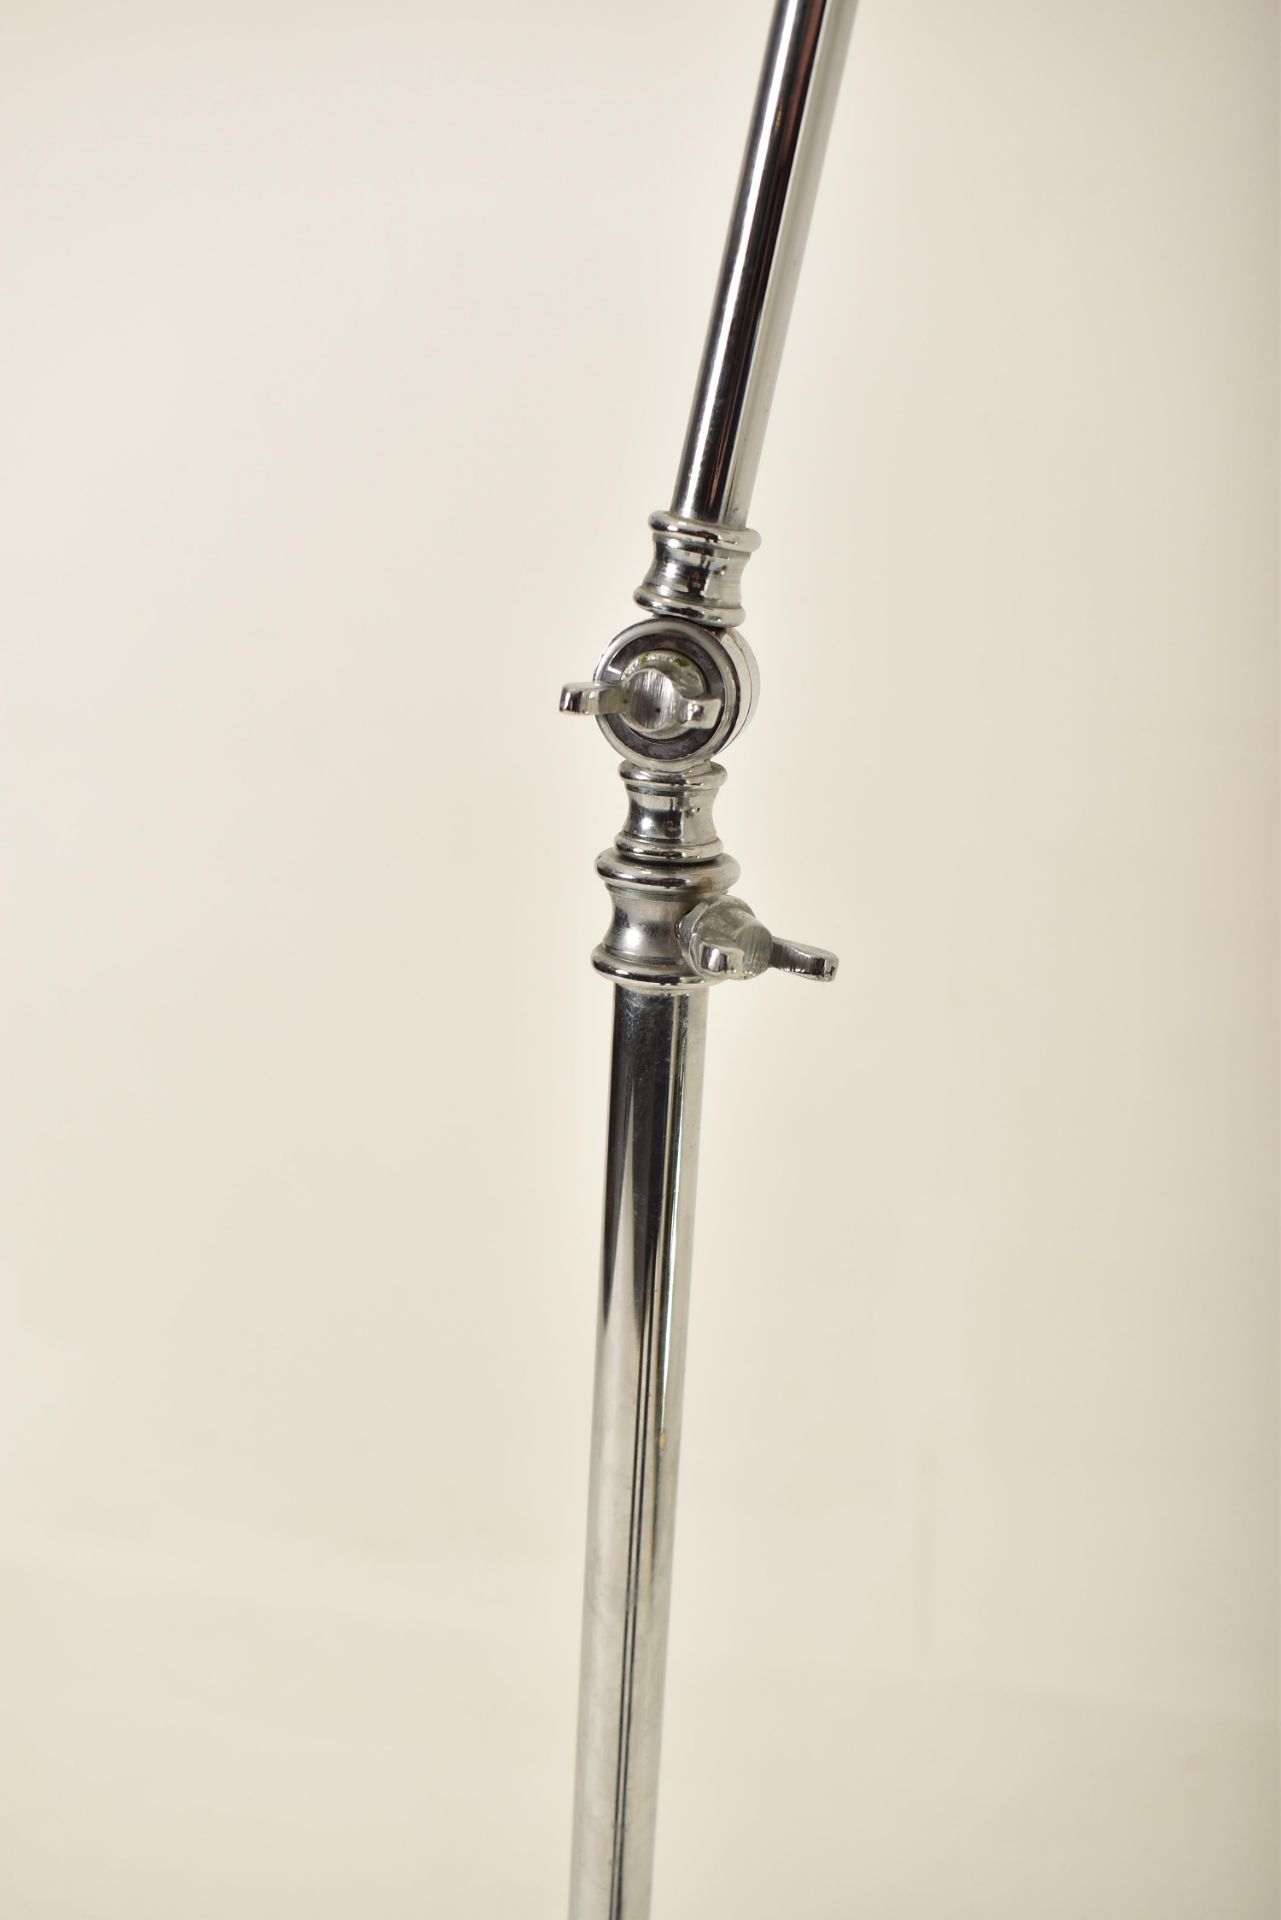 ART DECO STYLE 20TH CENTURY CHROME METAL FLOOR LAMP - Image 2 of 4